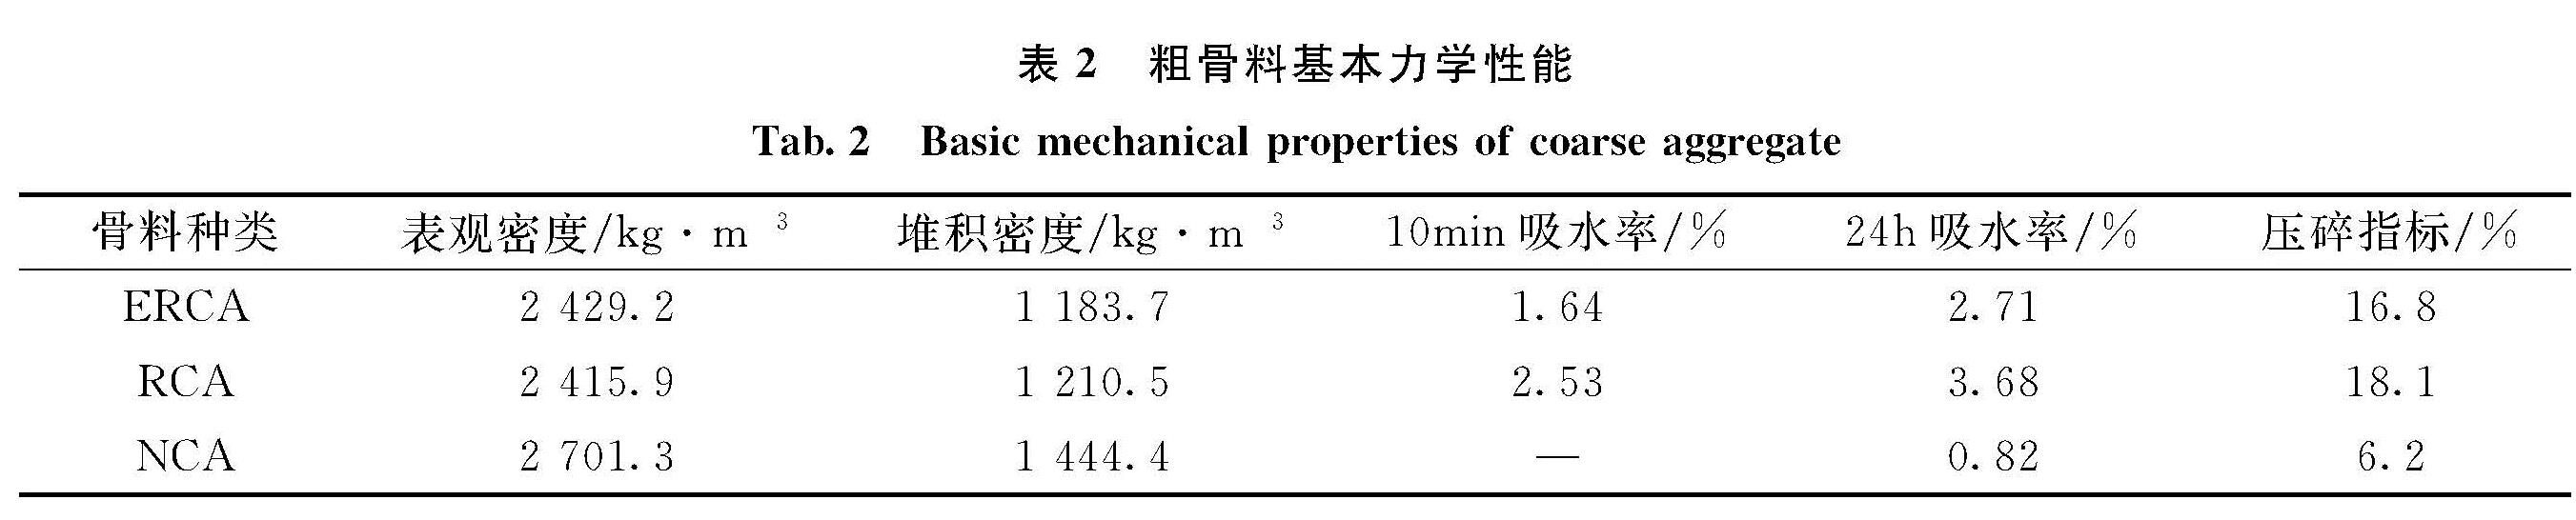 表2 粗骨料基本力学性能<br/>Tab.2 Basic mechanical properties of coarse aggregate